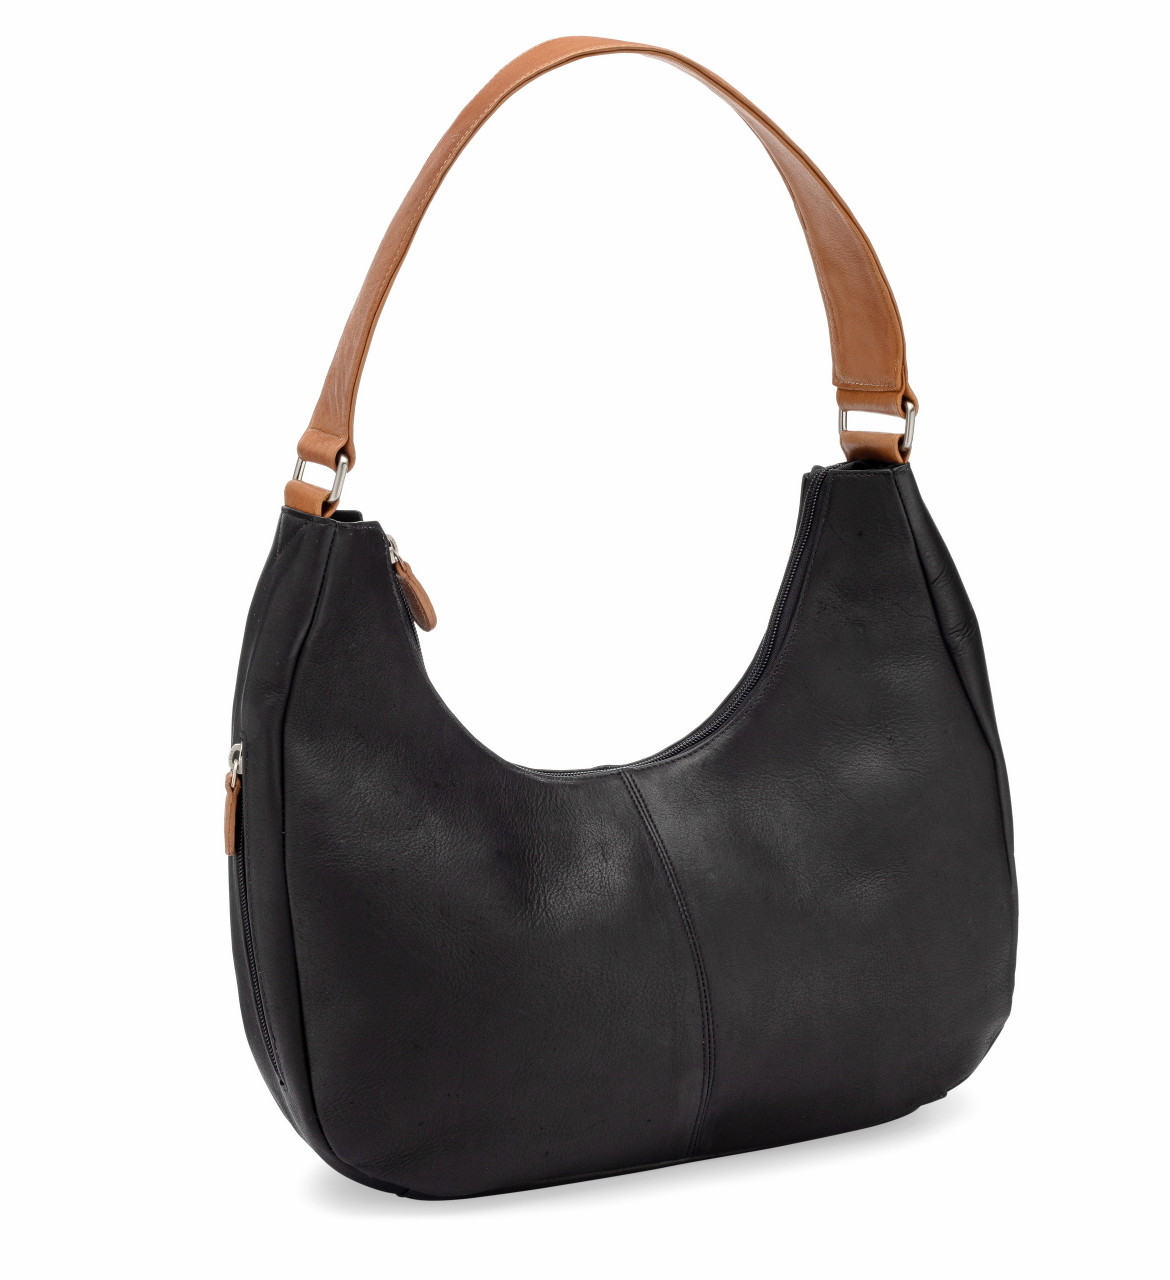 Hemlock Hobo - Vaquetta Handbag - Le Donne Leather